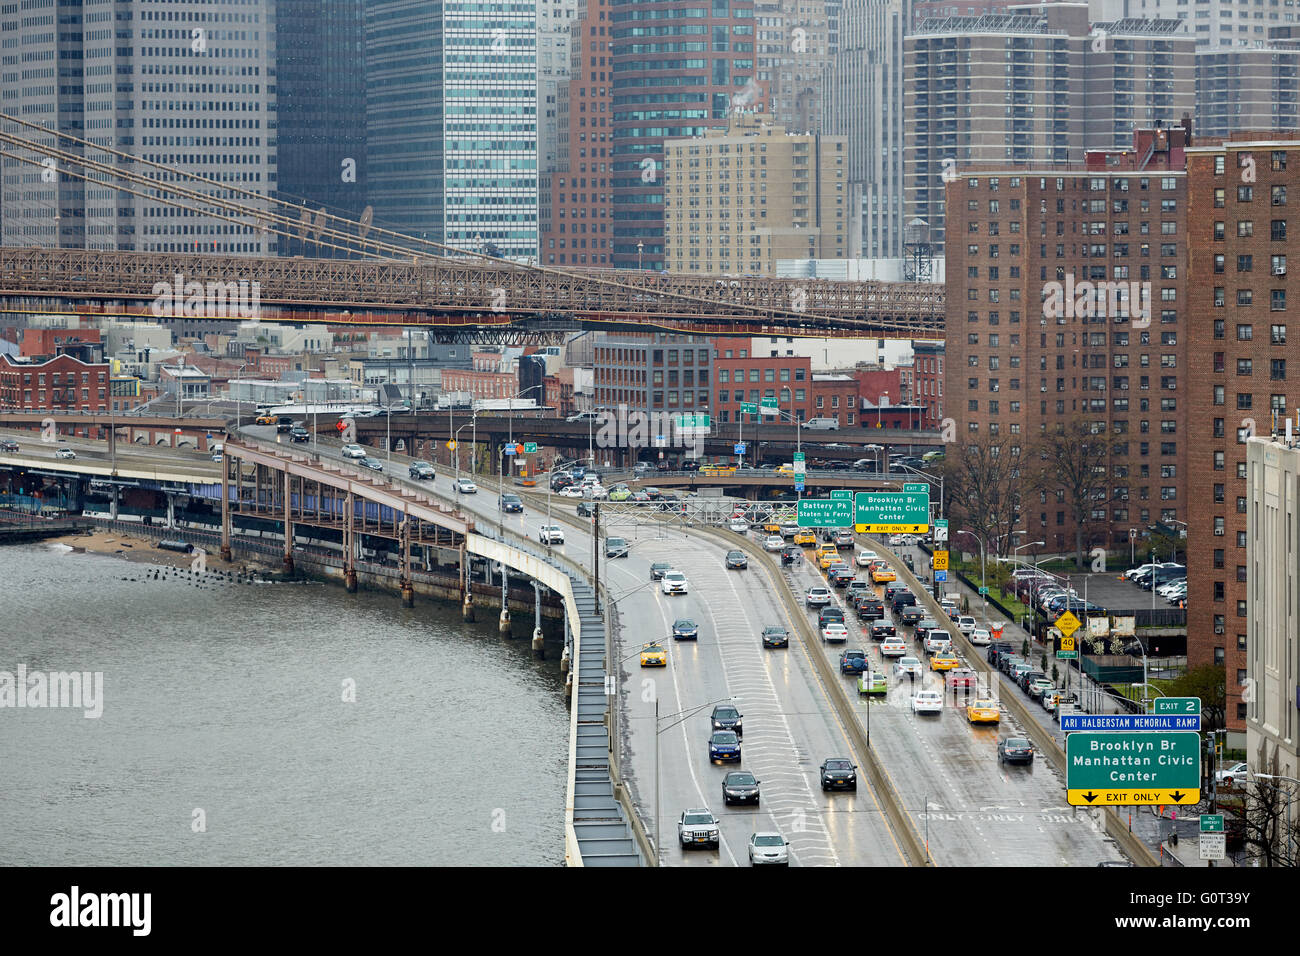 New York Blick von Manhattan Hängebrücke der FDR Drive Ausfahrt 2 Kfz Kfz Auto Fahrer-Fahrzeug-Motor angetrieben Stockfoto